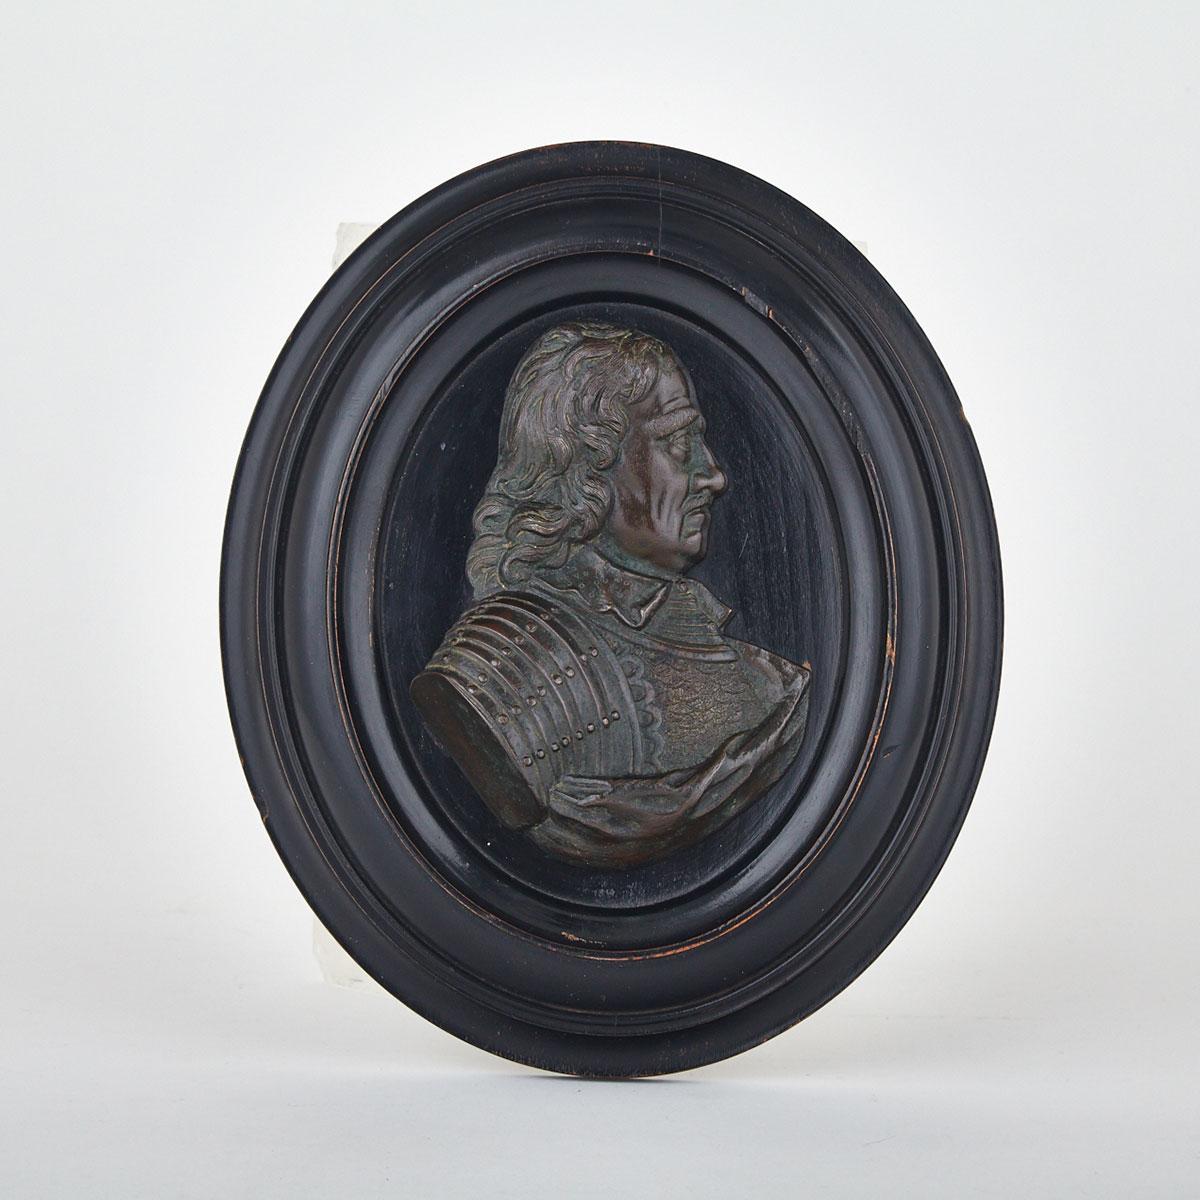 Patinated Bronze Relief Portrait Plaque of a Nobleman, 18th century